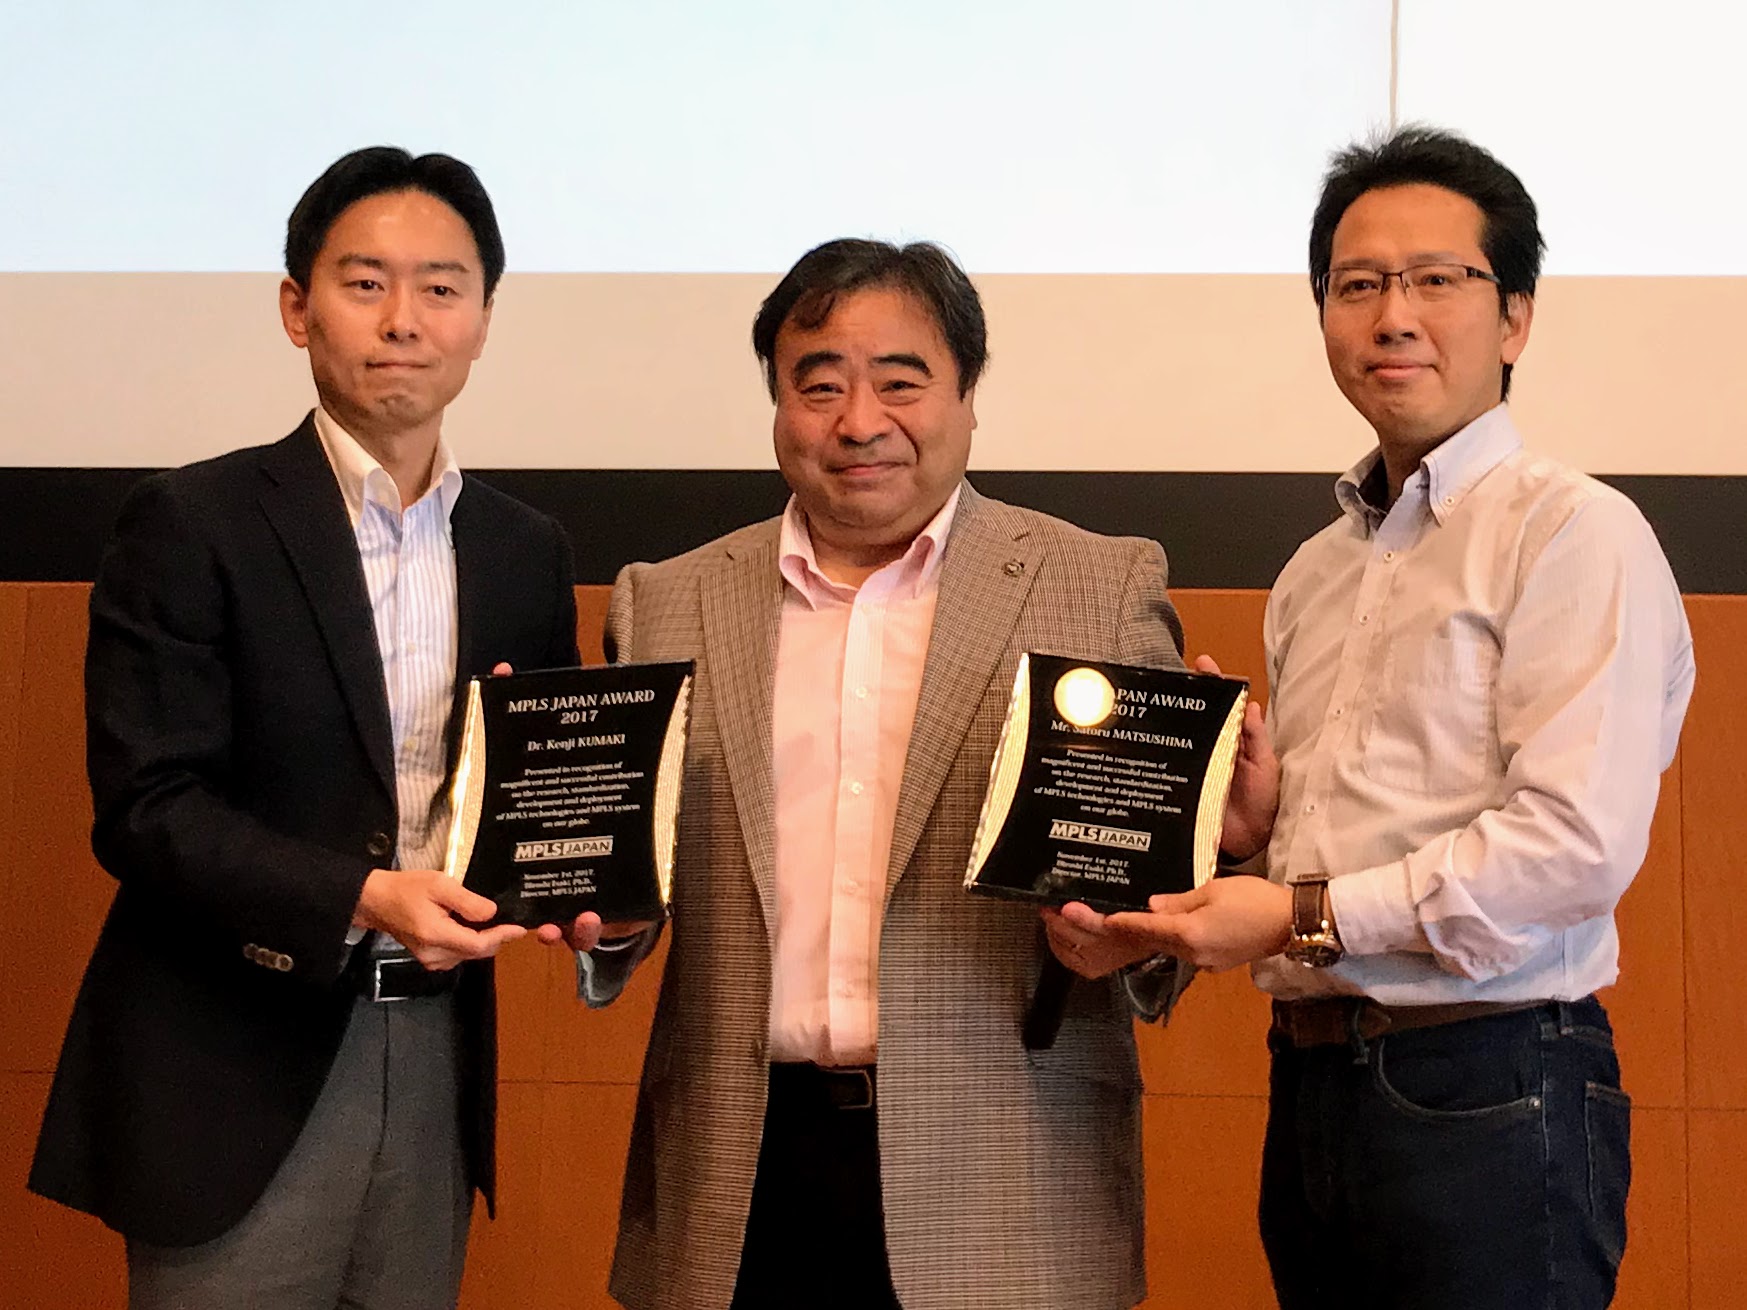 MPLS JAPAN Award 2017 winners